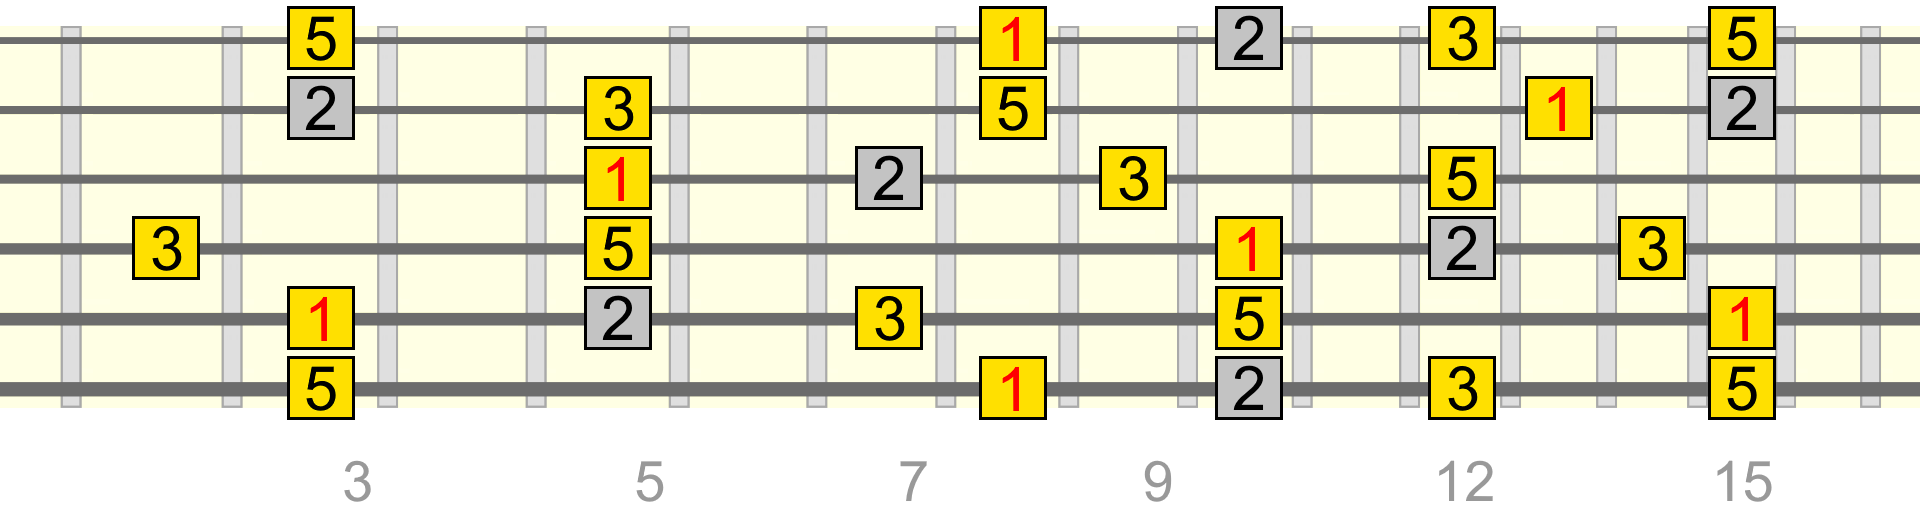 c-add-2-full-pattern